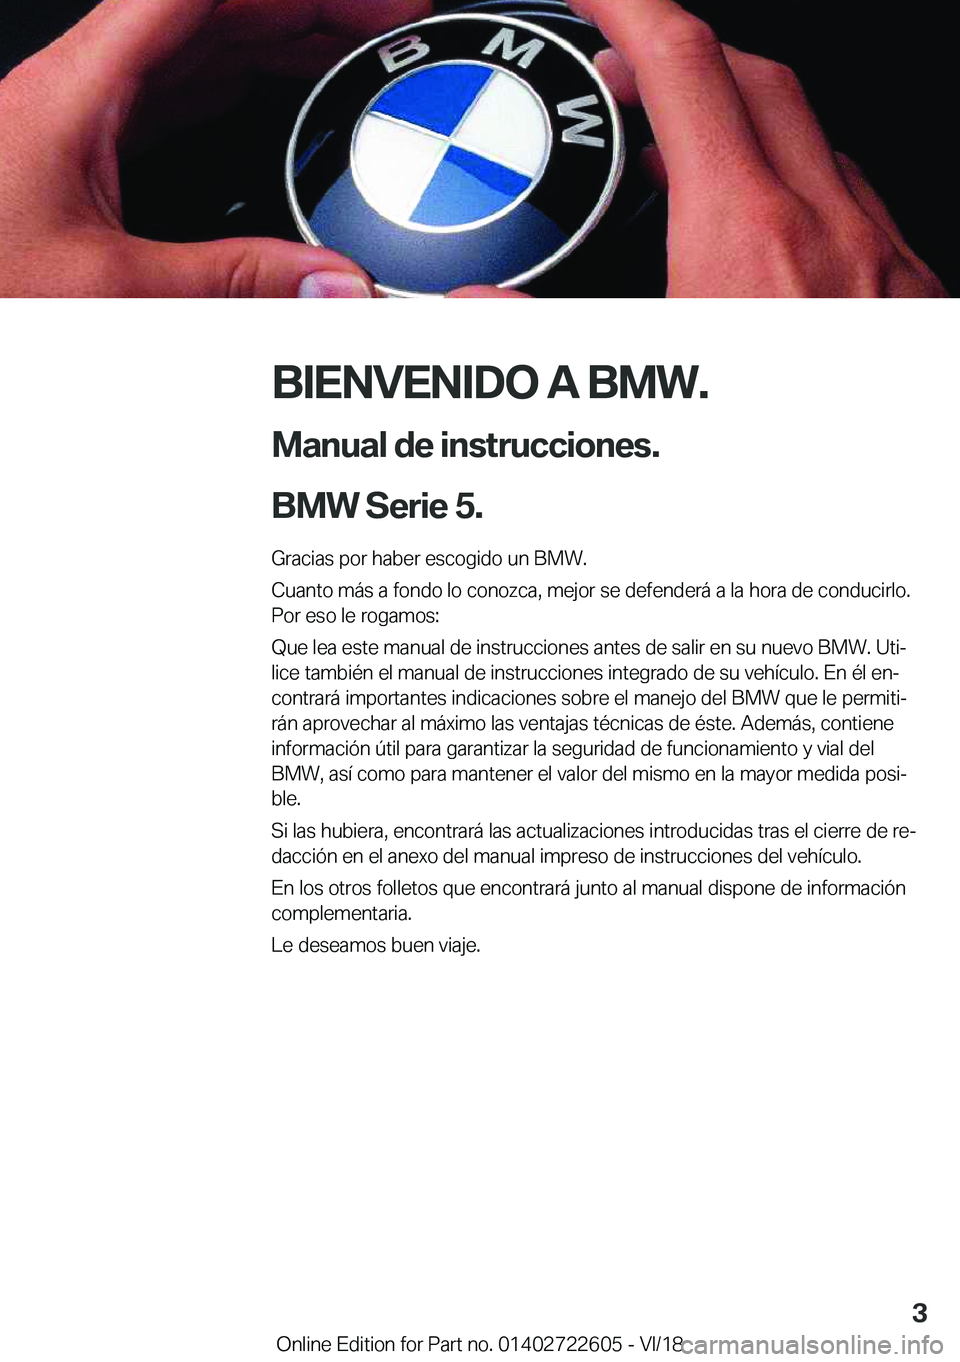 BMW 5 SERIES 2019  Manuales de Empleo (in Spanish) �B�I�E�N�V�E�N�I�D�O��A��B�M�W�.
�M�a�n�u�a�l��d�e��i�n�s�t�r�u�c�c�i�o�n�e�s�.
�B�M�W��S�e�r�i�e��5�. �G�r�a�c�i�a�s��p�o�r��h�a�b�e�r��e�s�c�o�g�i�d�o��u�n��B�M�W�.
�C�u�a�n�t�o��m�